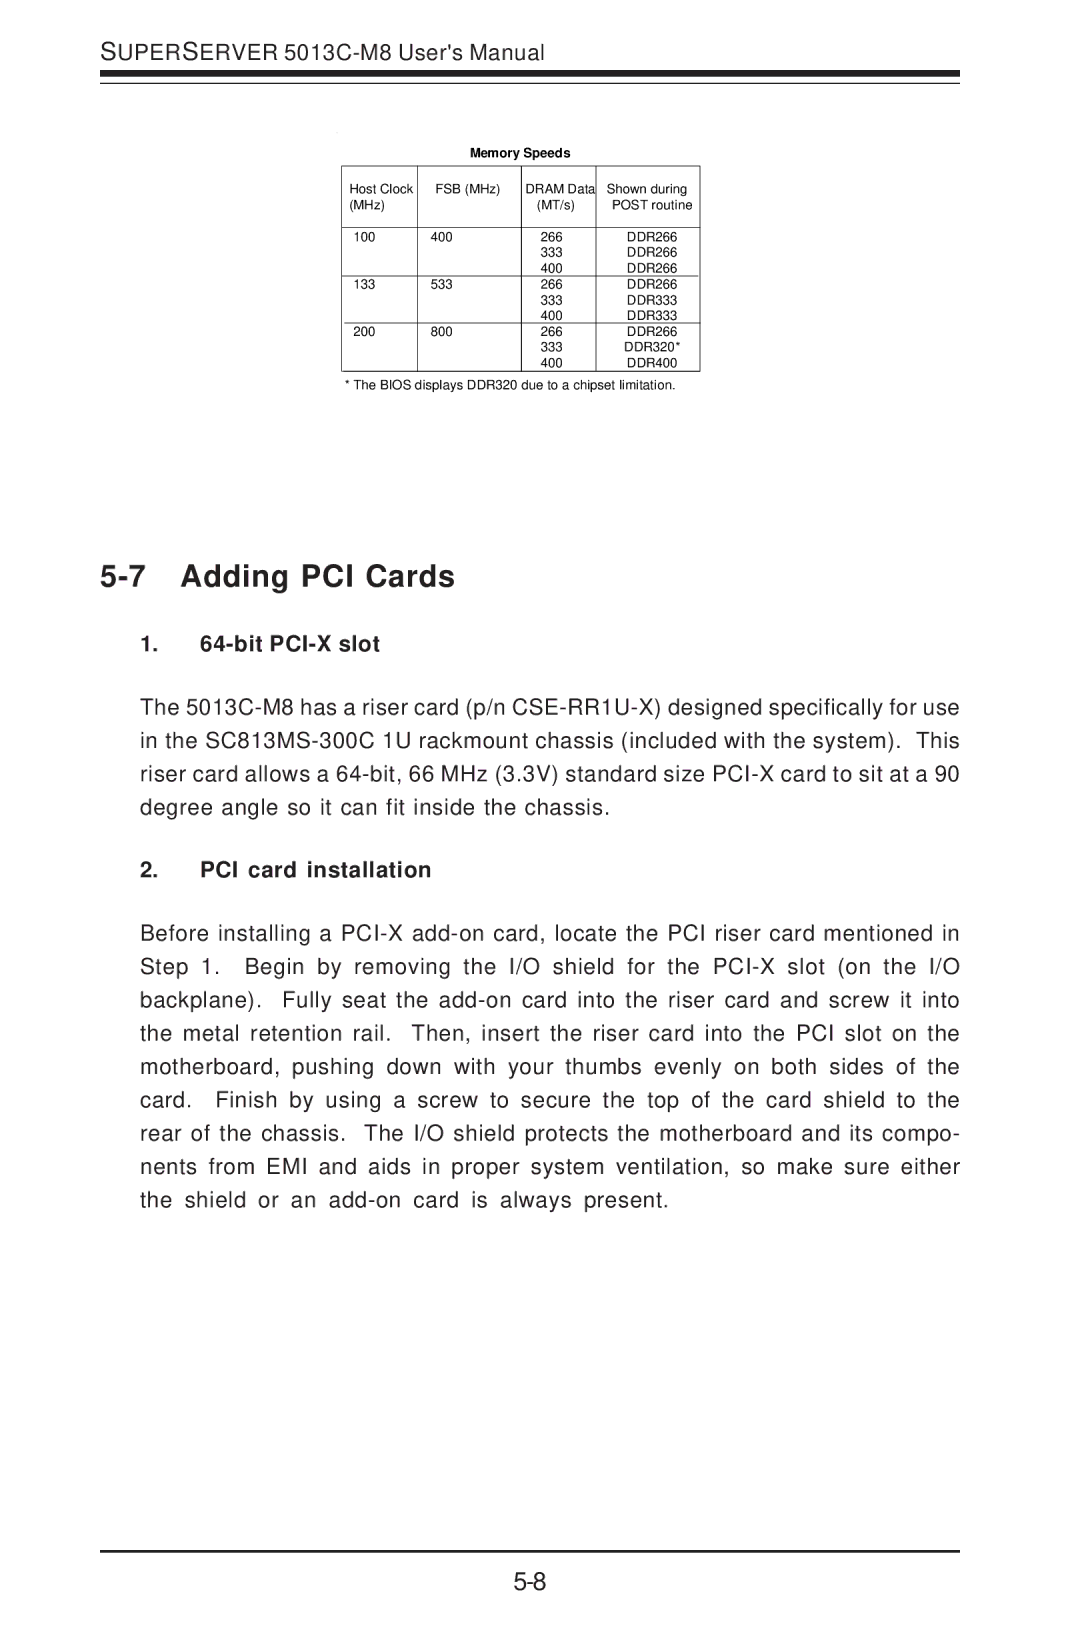 SUPER MICRO Computer 5013C-M8 user manual Adding PCI Cards, Memory Speeds 